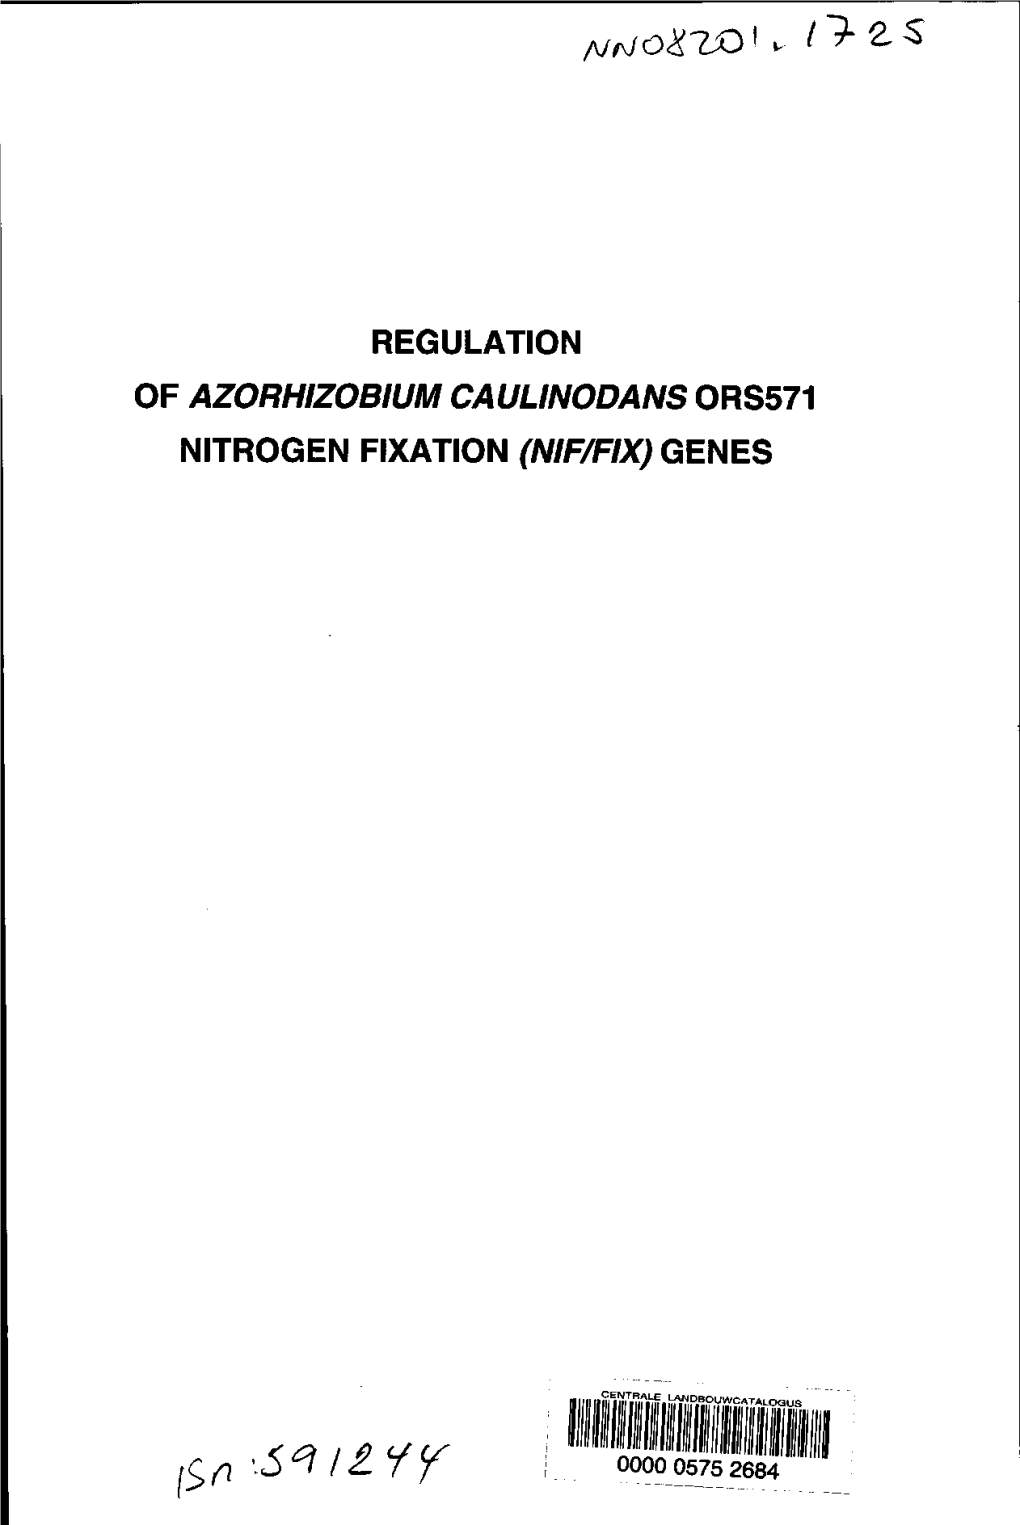 Regulation of Azorhizobium Caulinodans ORS571 Nitrogen Fixation (Nif/Fix) Genes / John Stigter